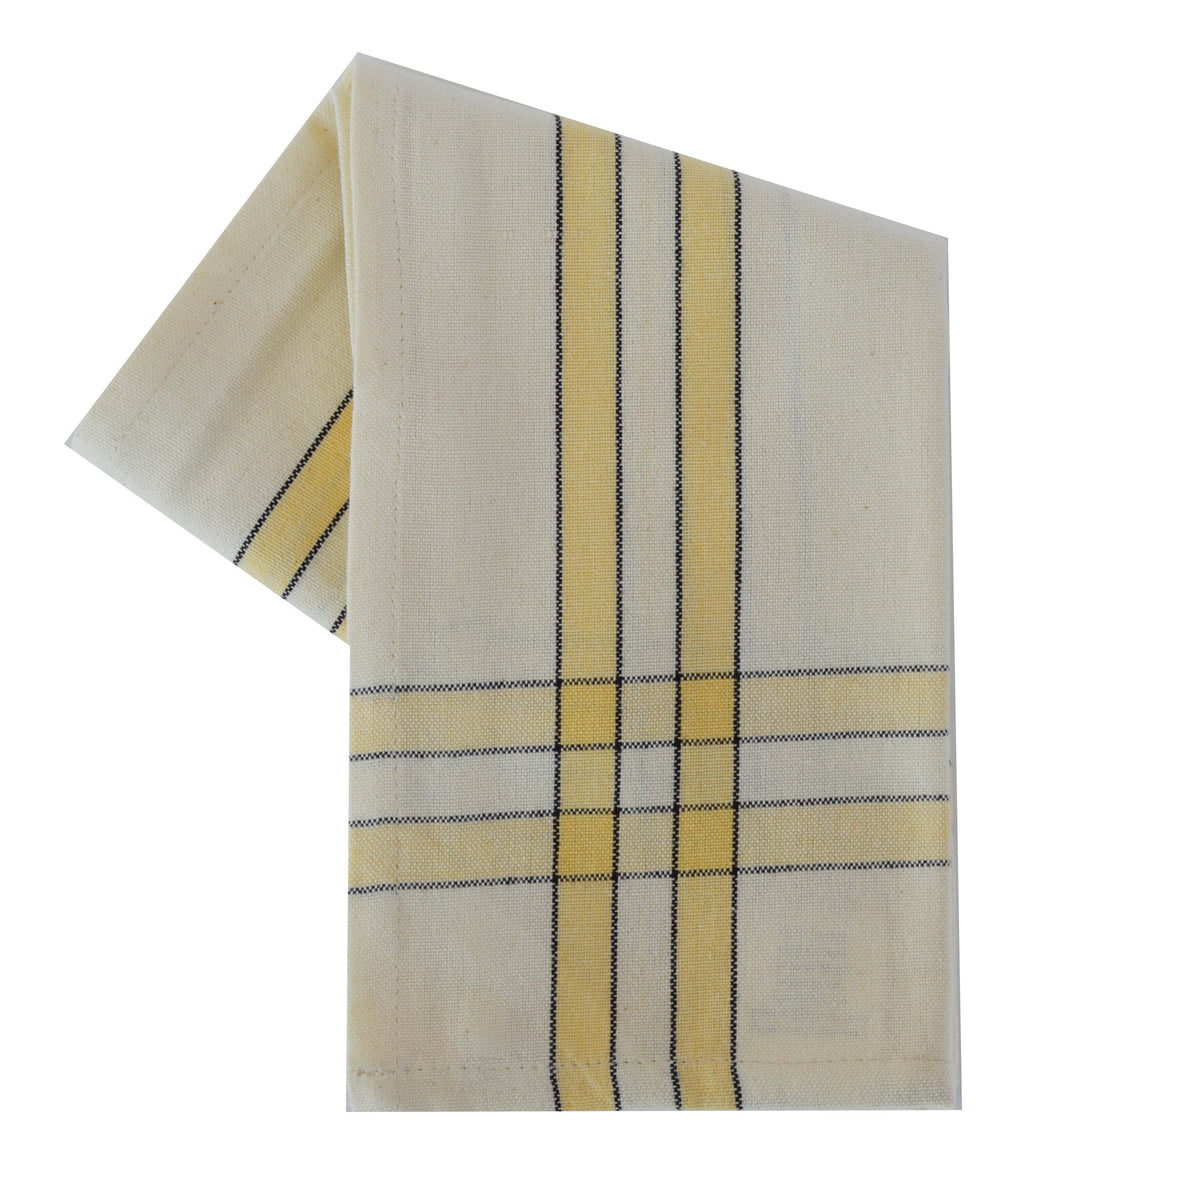 Fall Seasonal Towel Set Two Stripe Border Variety set of 5